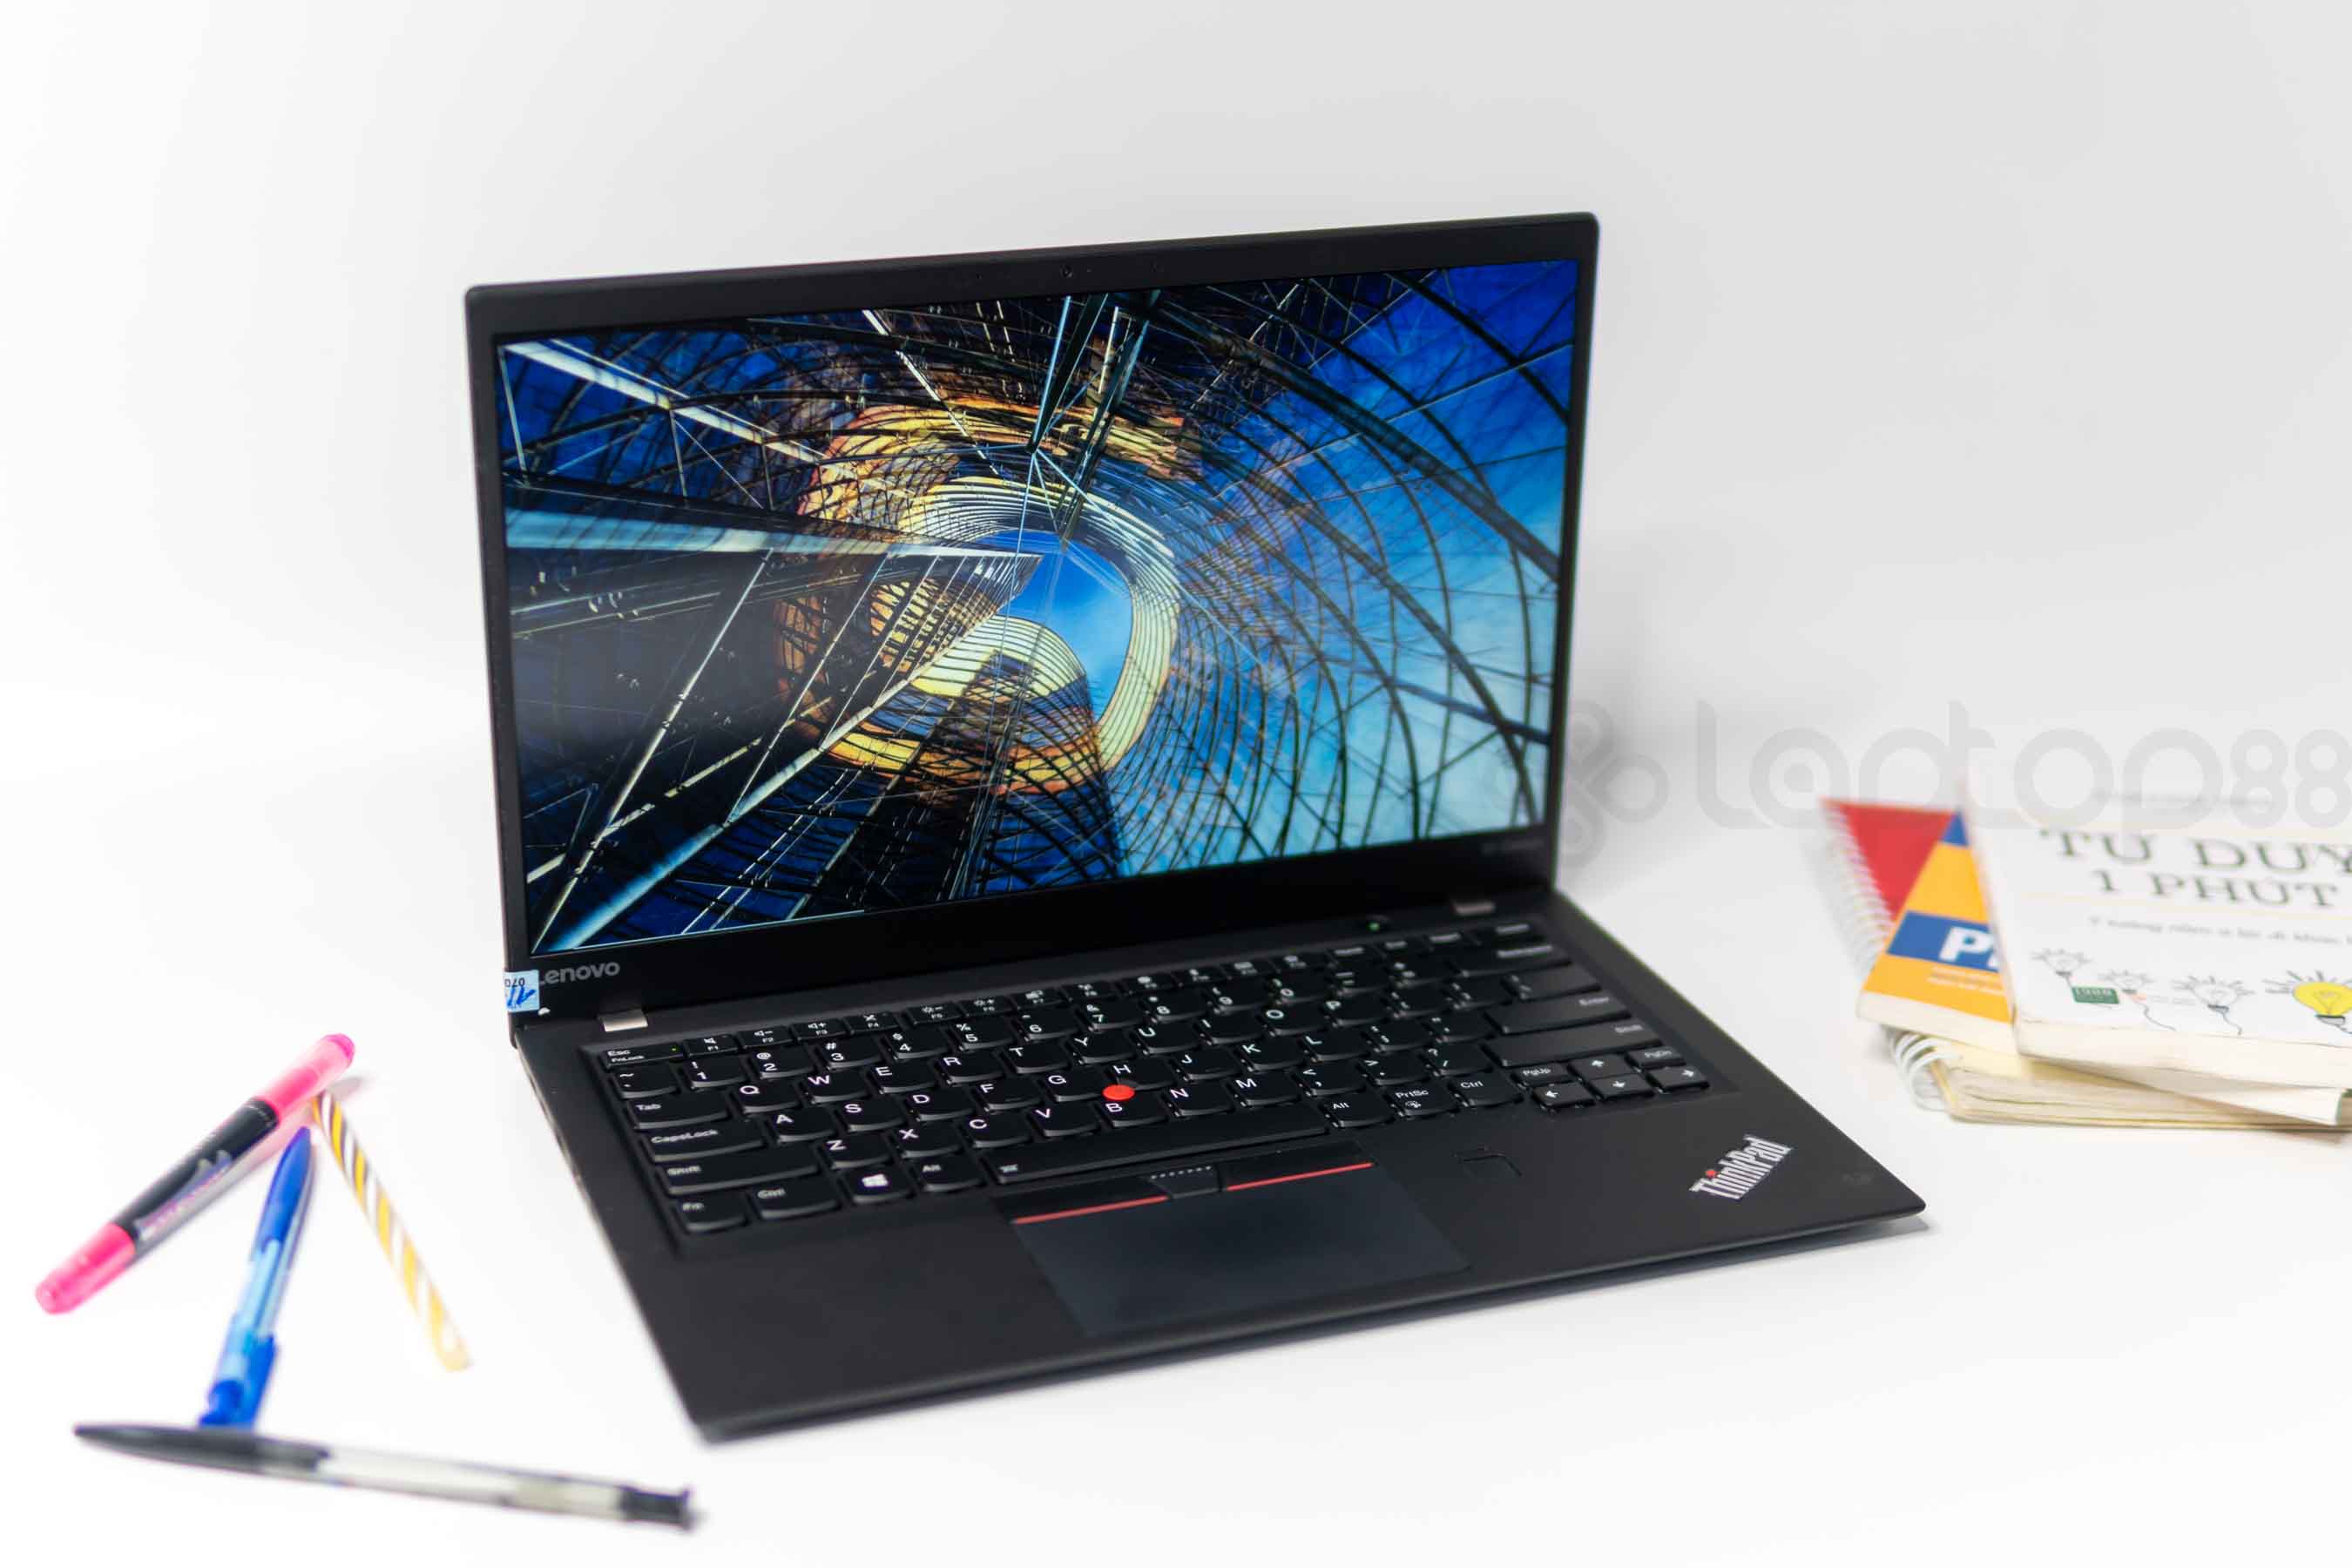 Laptop Cũ Lenovo Thinkpad X1 Carbon Gen 5 - Intel Core i5